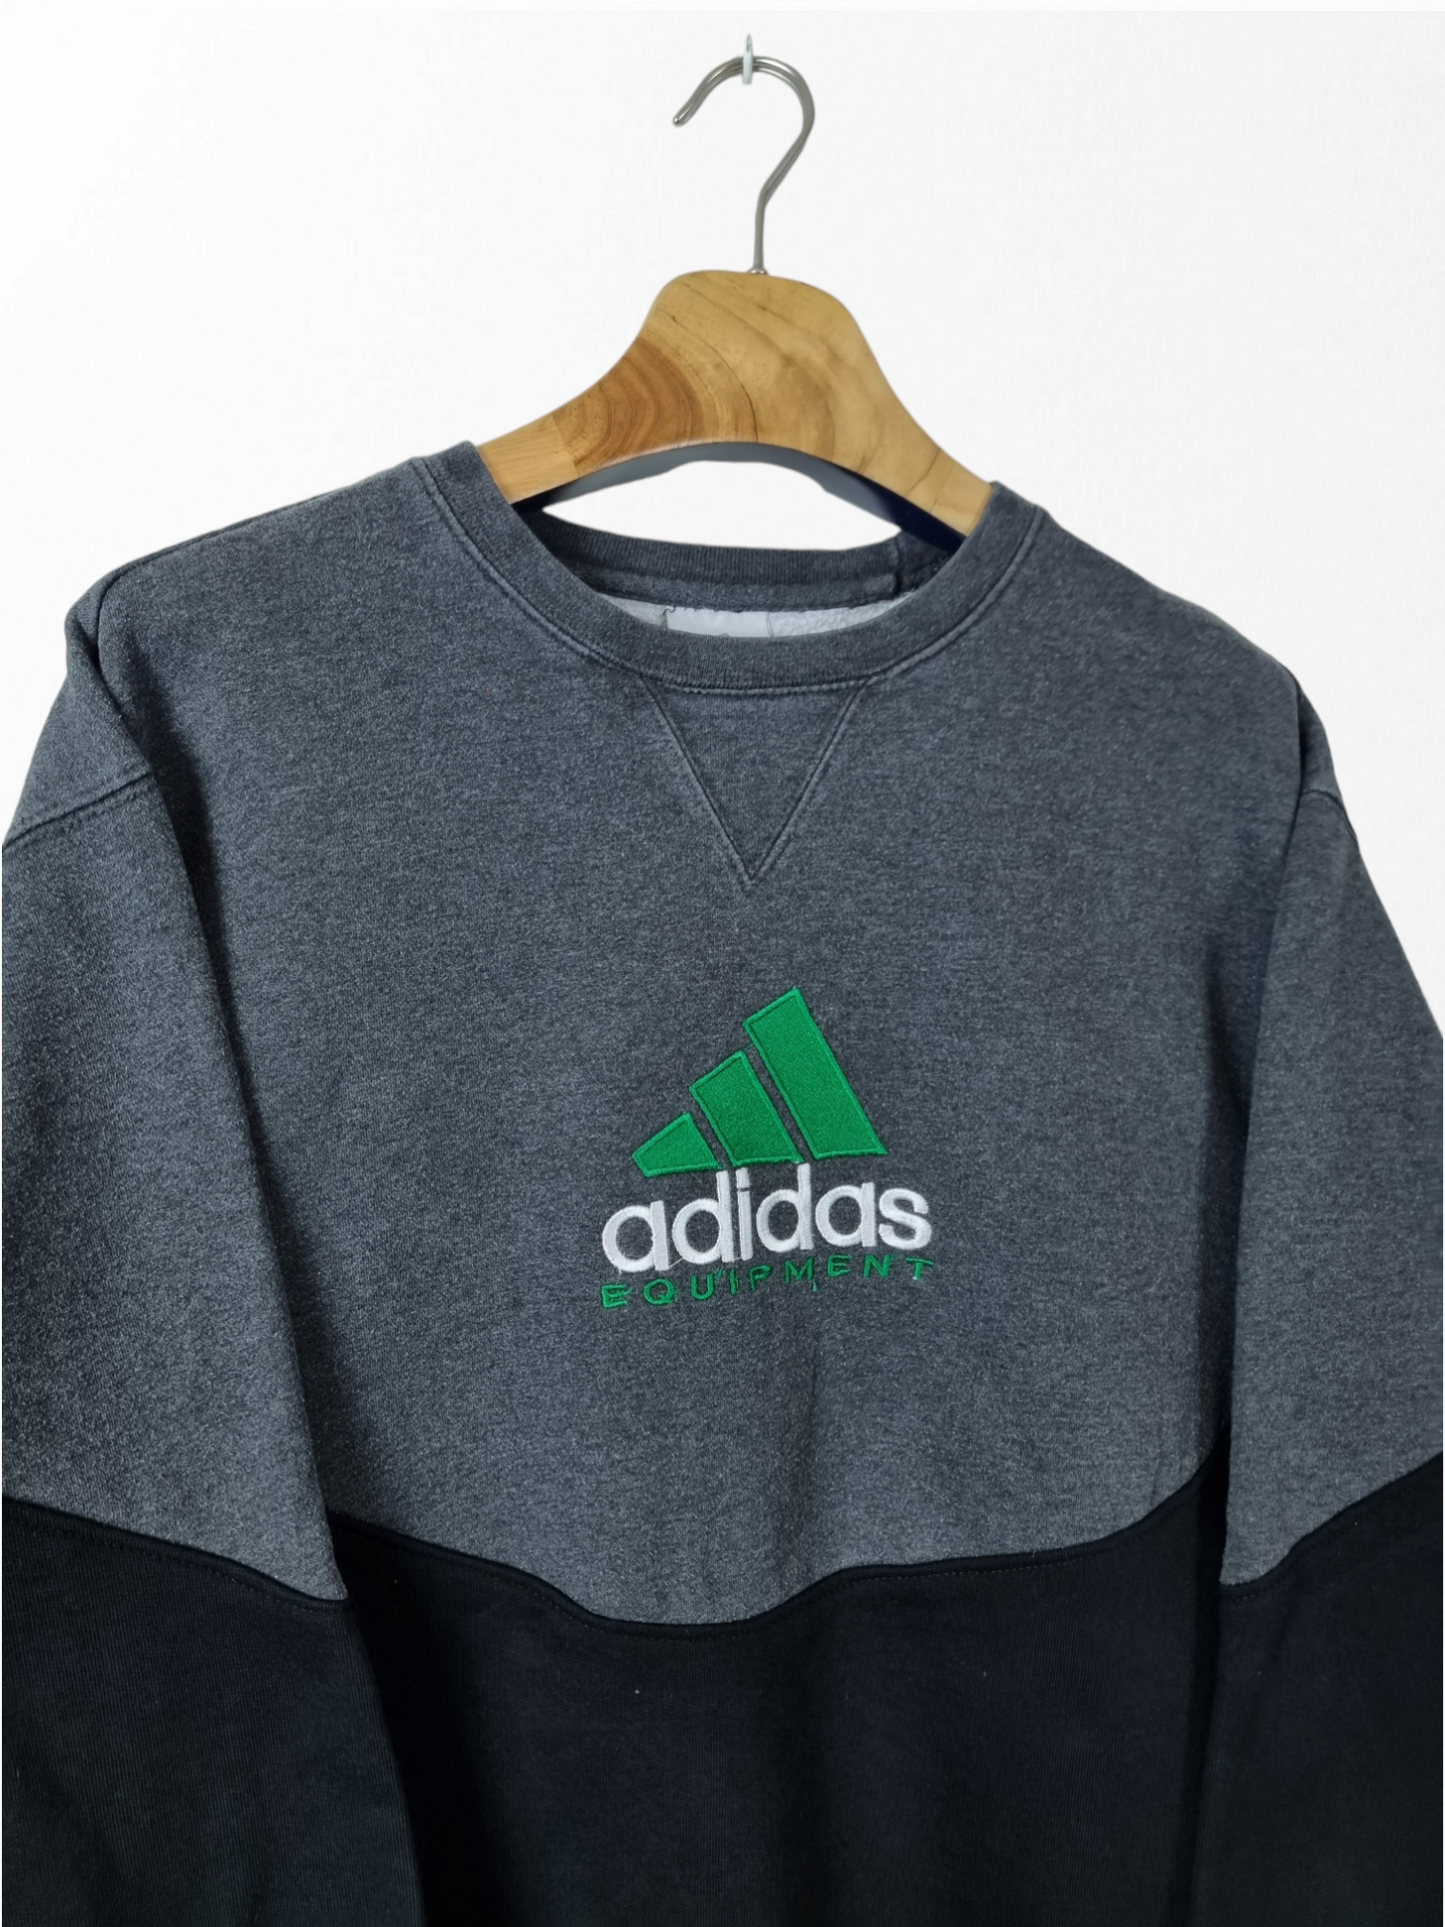 Adidas equipment sweater maat M